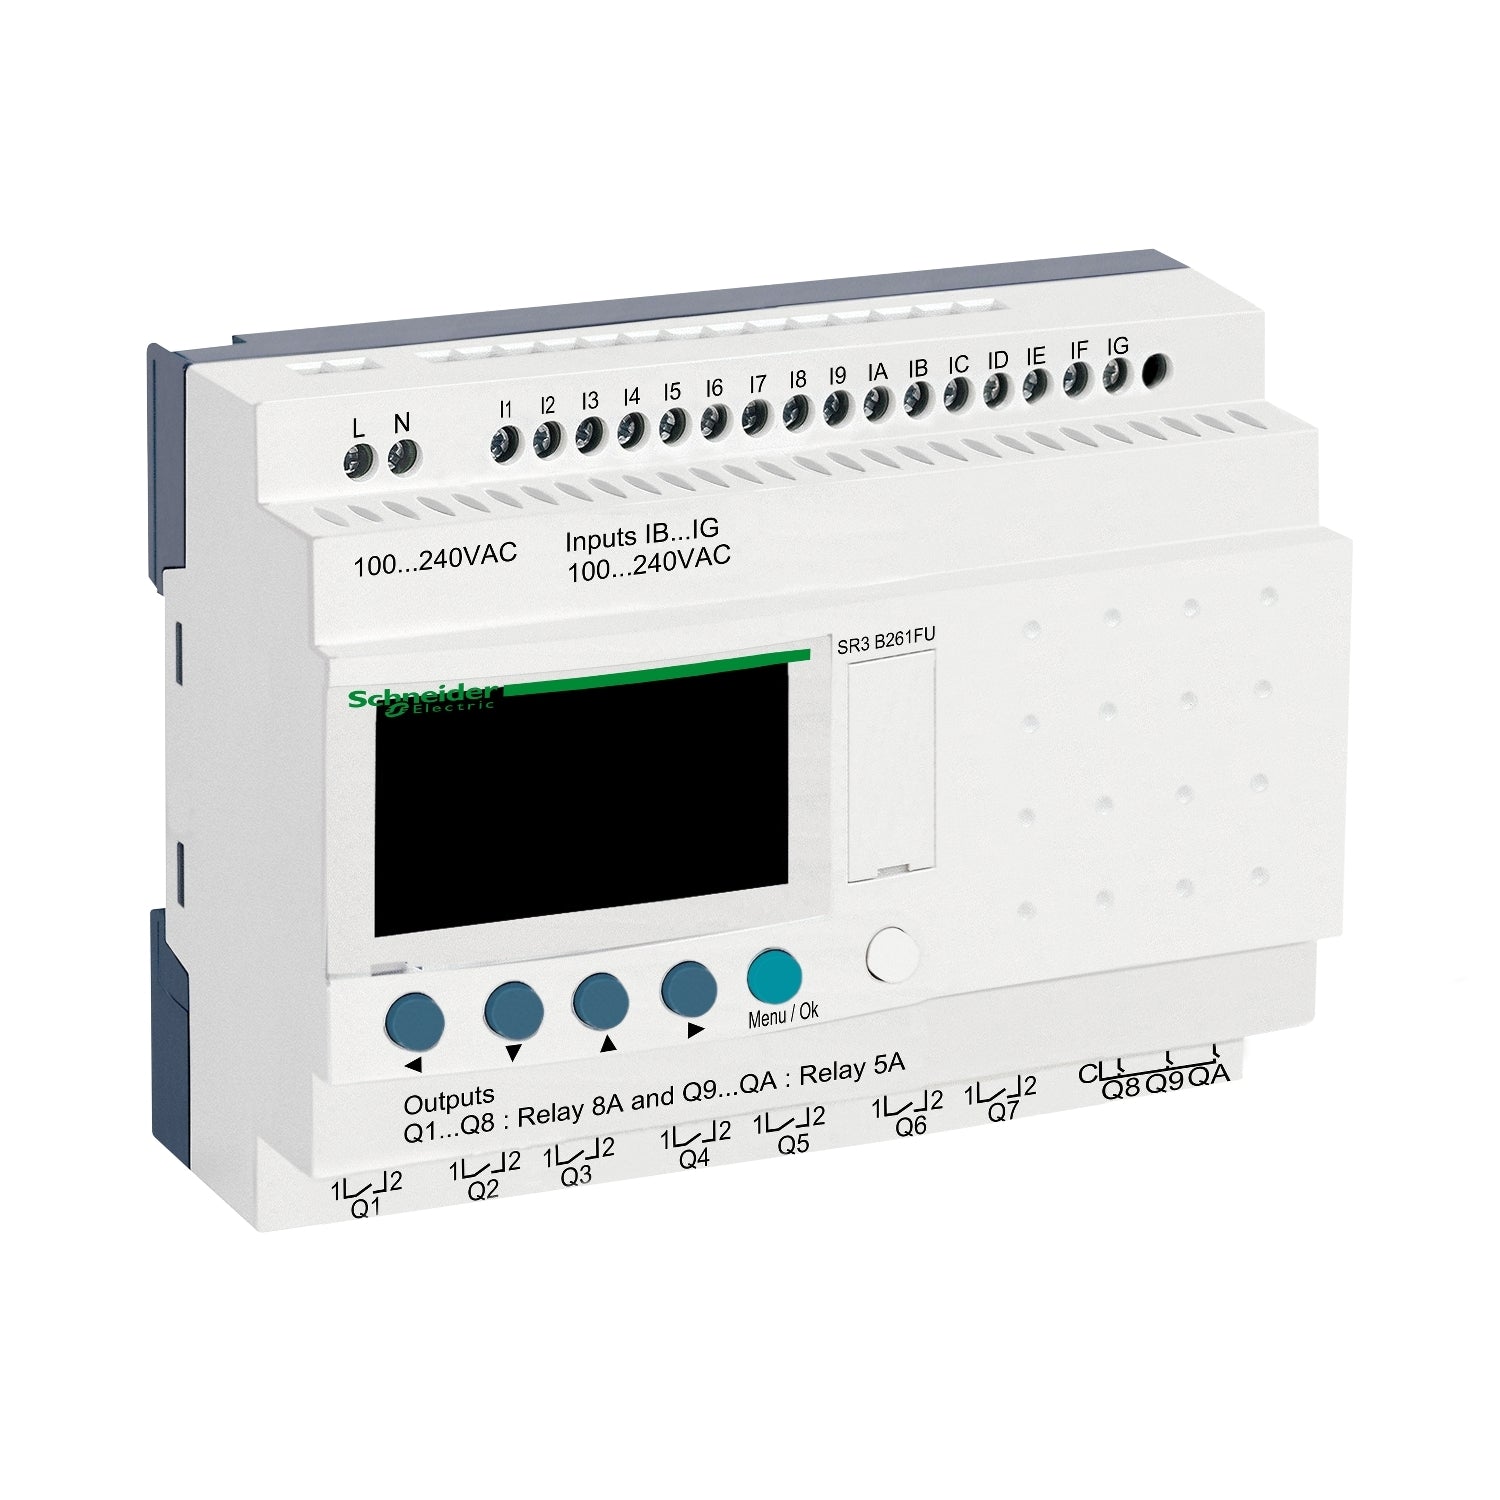 SR3B261FU | Schneider Electric | Modular smart relay